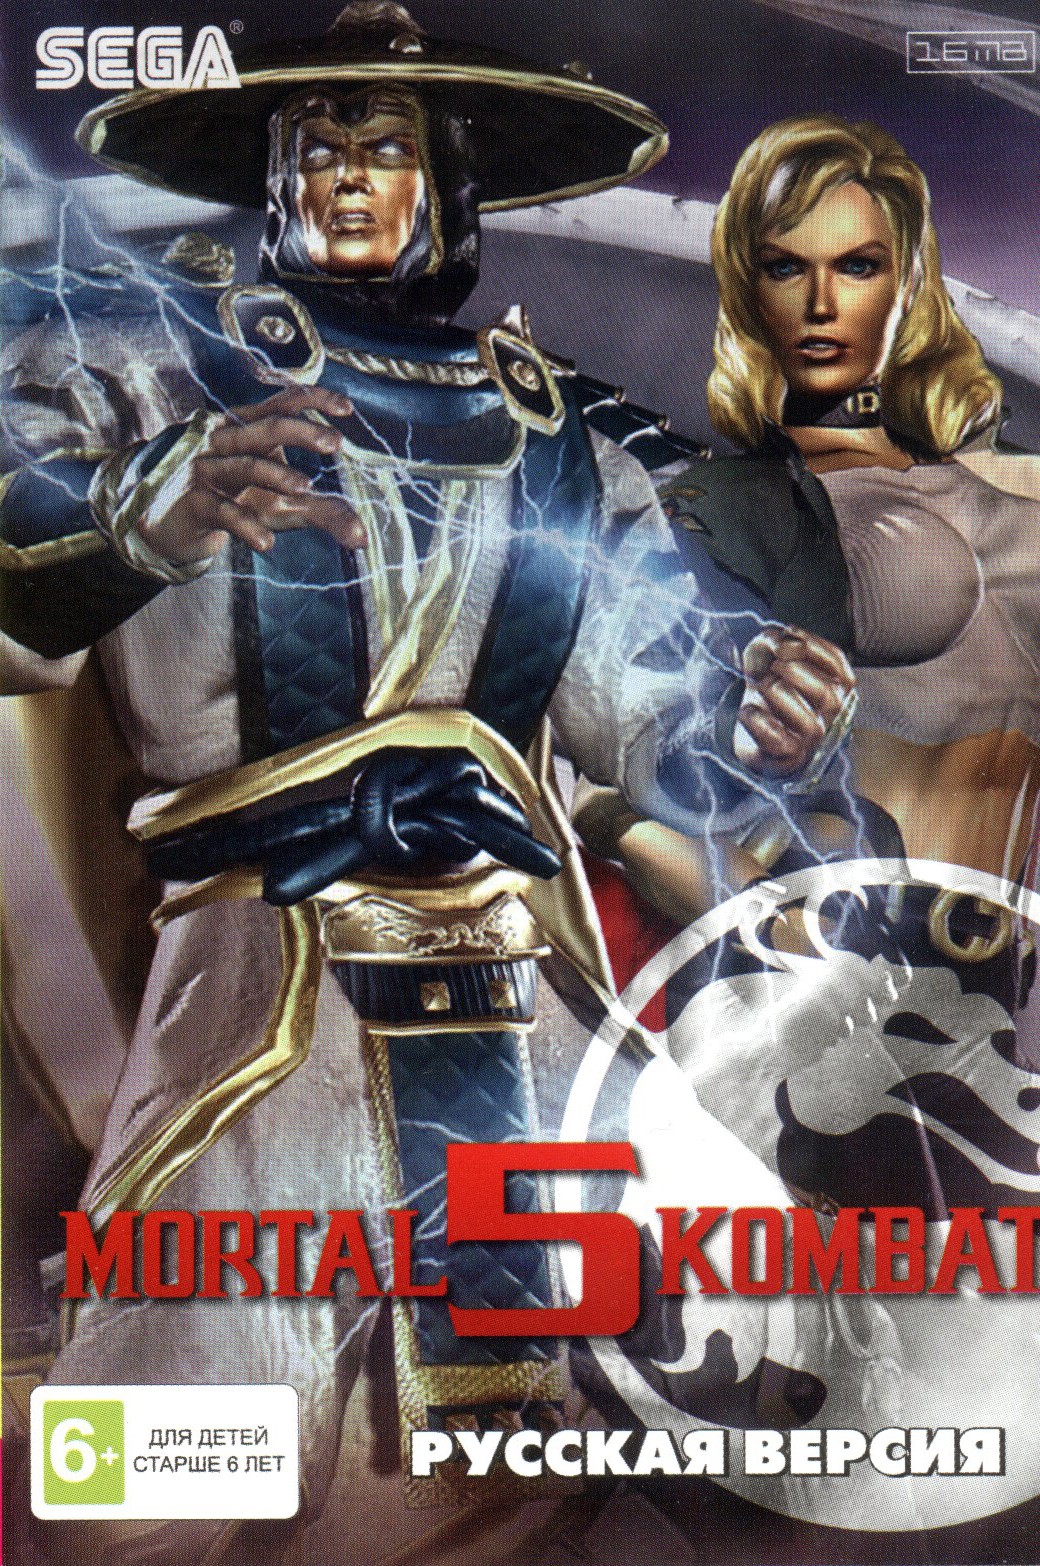 Https mk 5. MK 5 Sega. Мортал комбат 5 сега. Mortal Kombat 5 sub Zero Sega. MK 5 Subzero Sega.